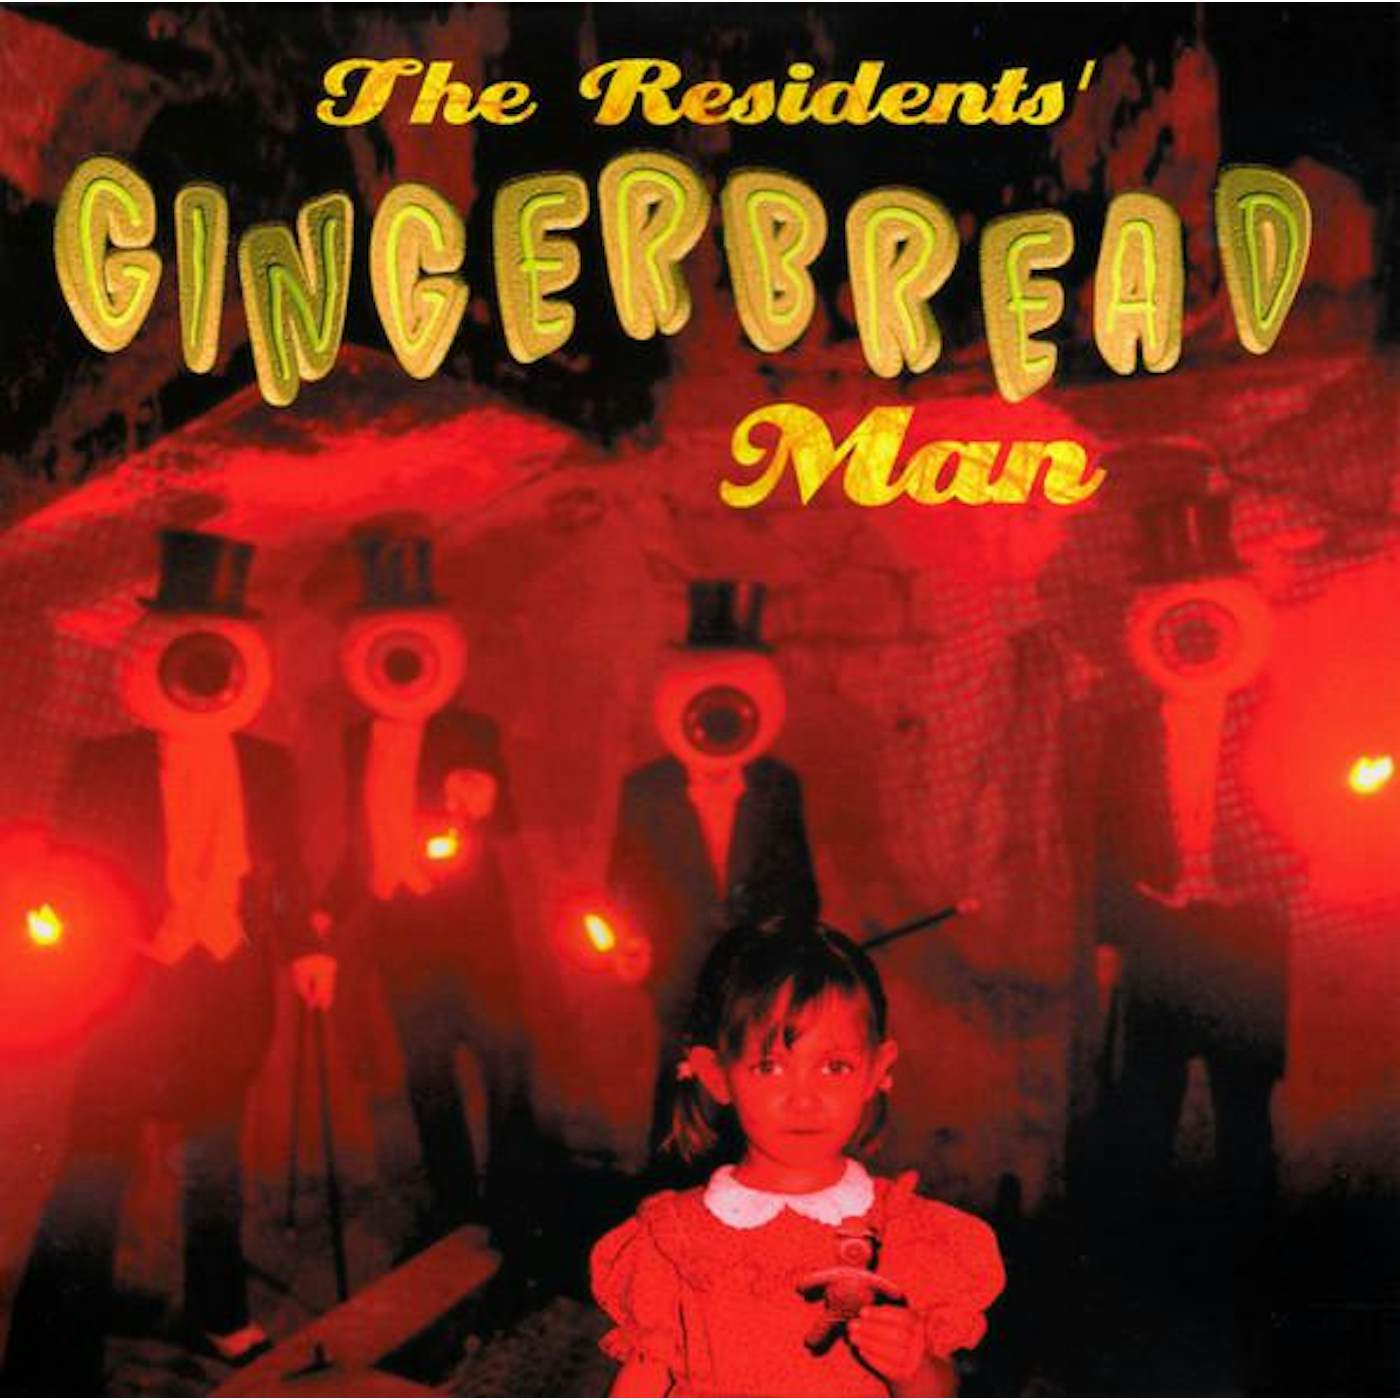 The Residents GINGERBREAD MAN Vinyl Record